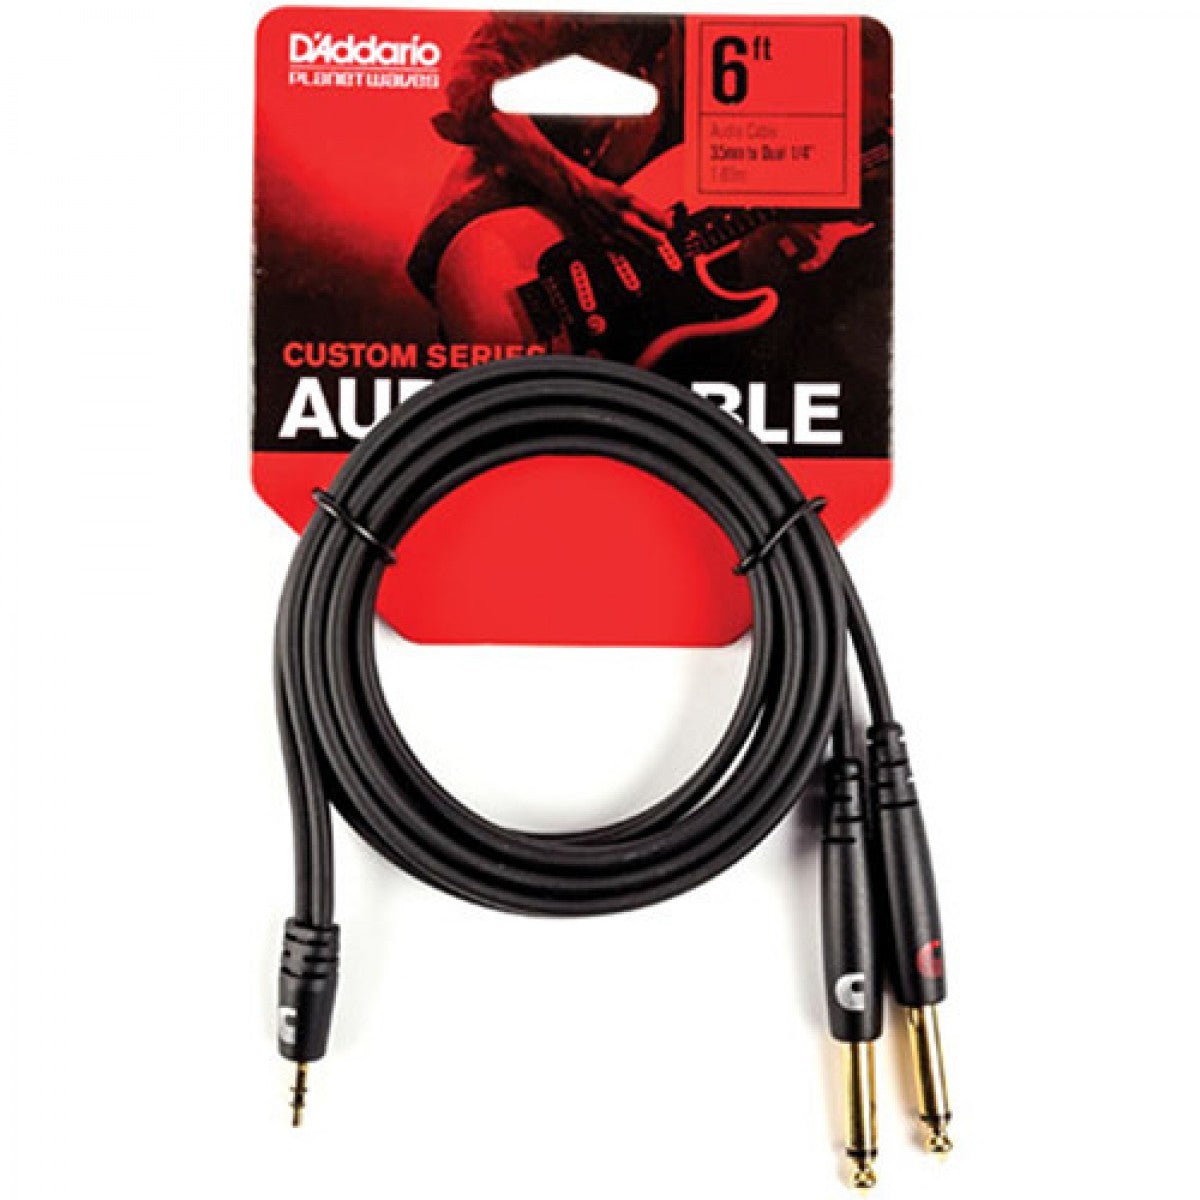 D'Addario Custom Series Stereo 3.55mm - Dual 1/4 Mono Audio Cable